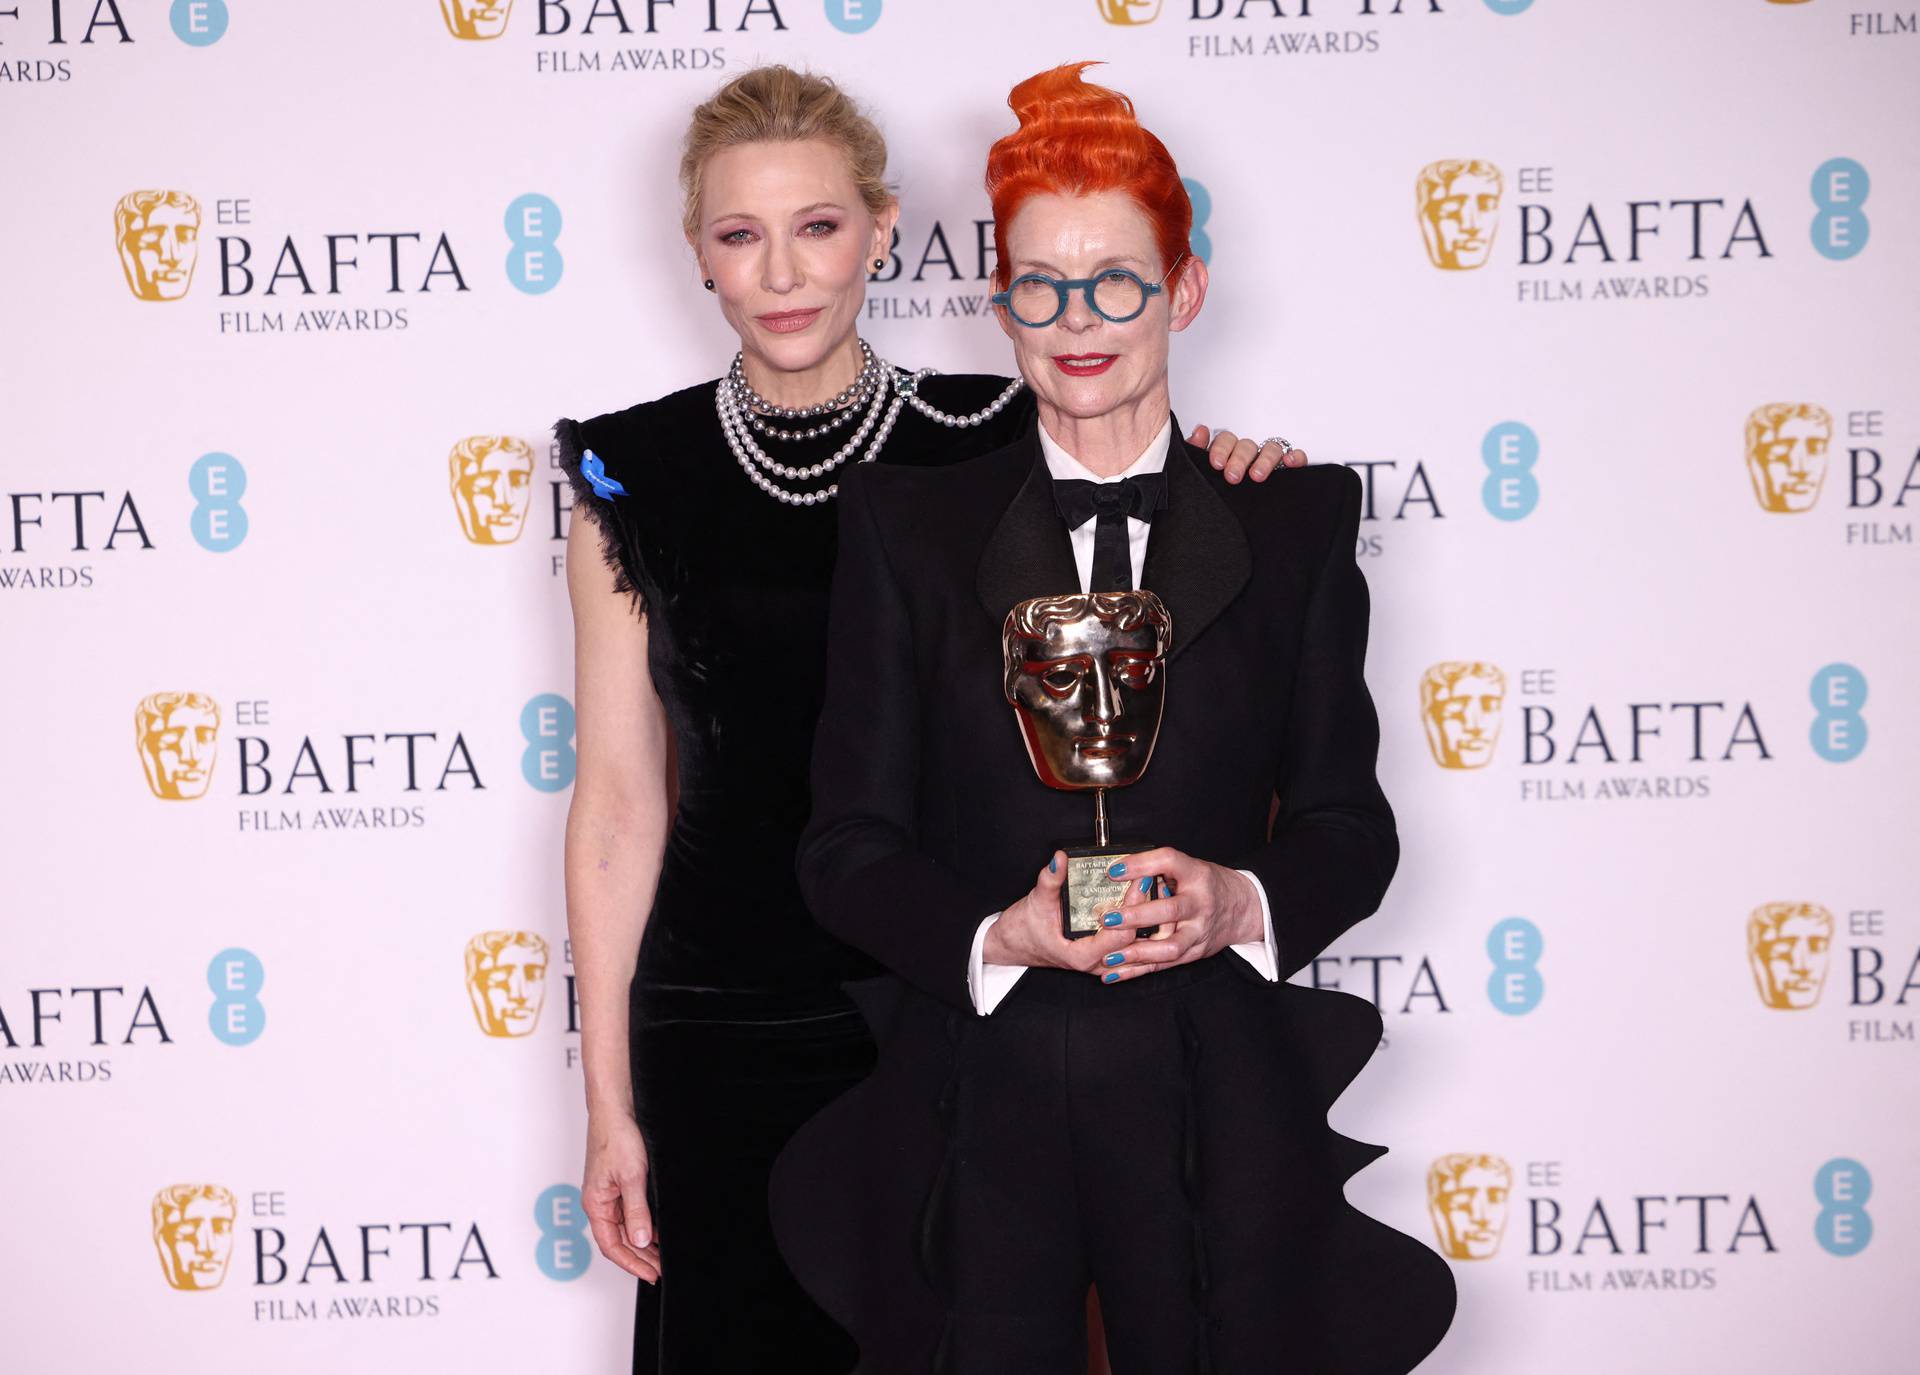 The 2023 BAFTA Film Awards